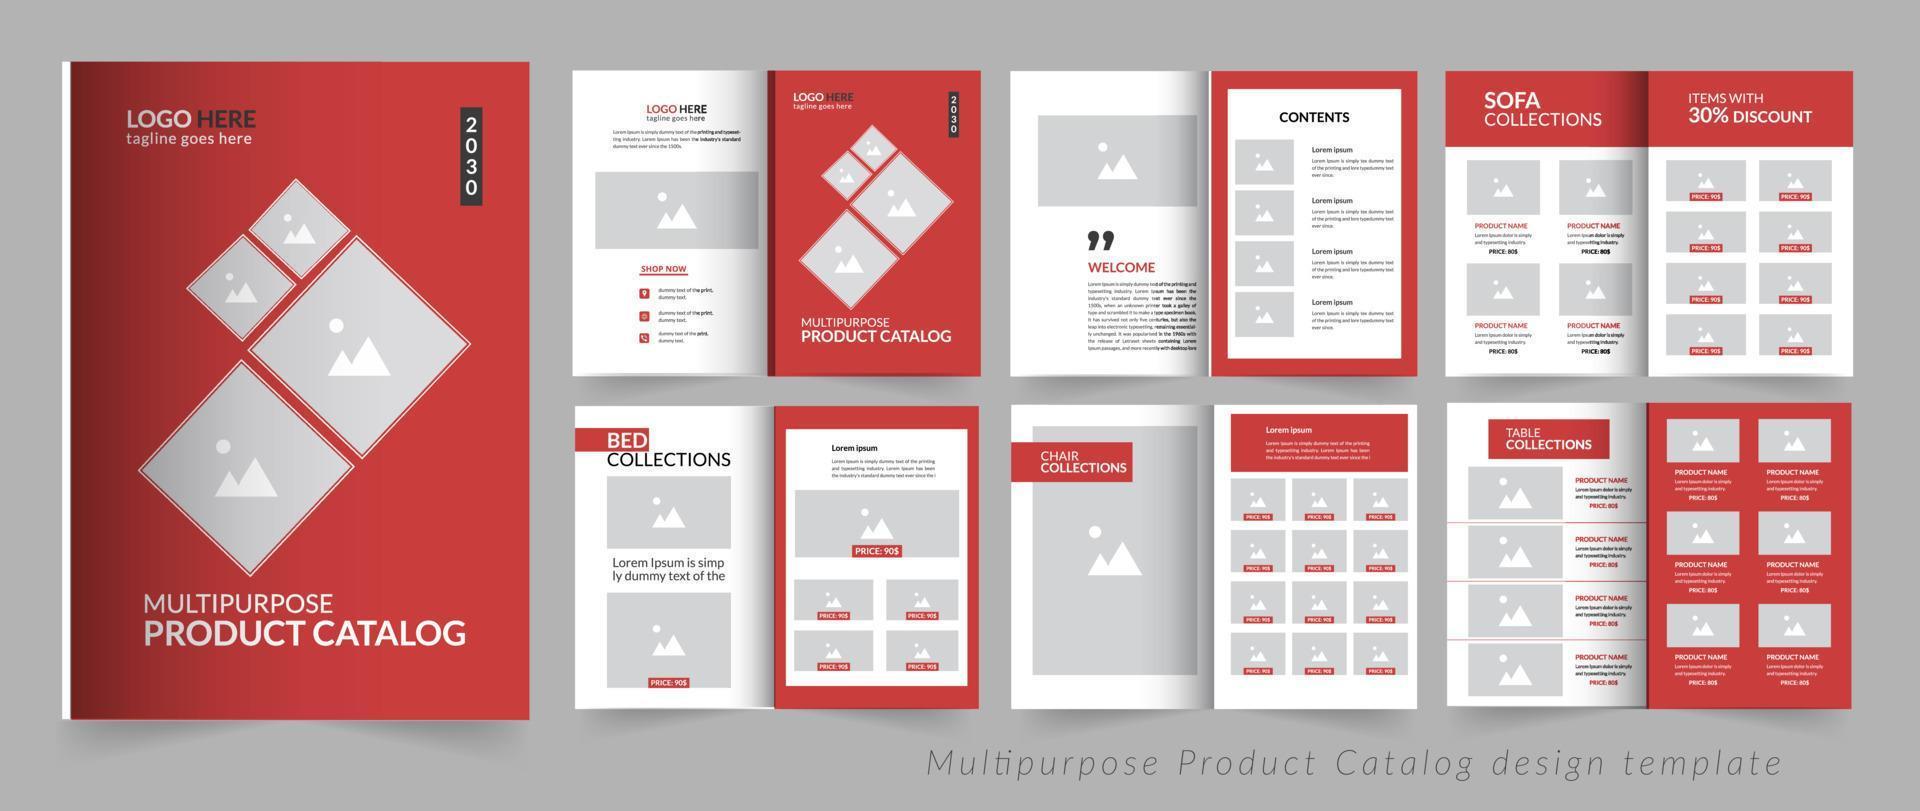 plantilla de diseño de catálogo de productos multipropósito moderno vector